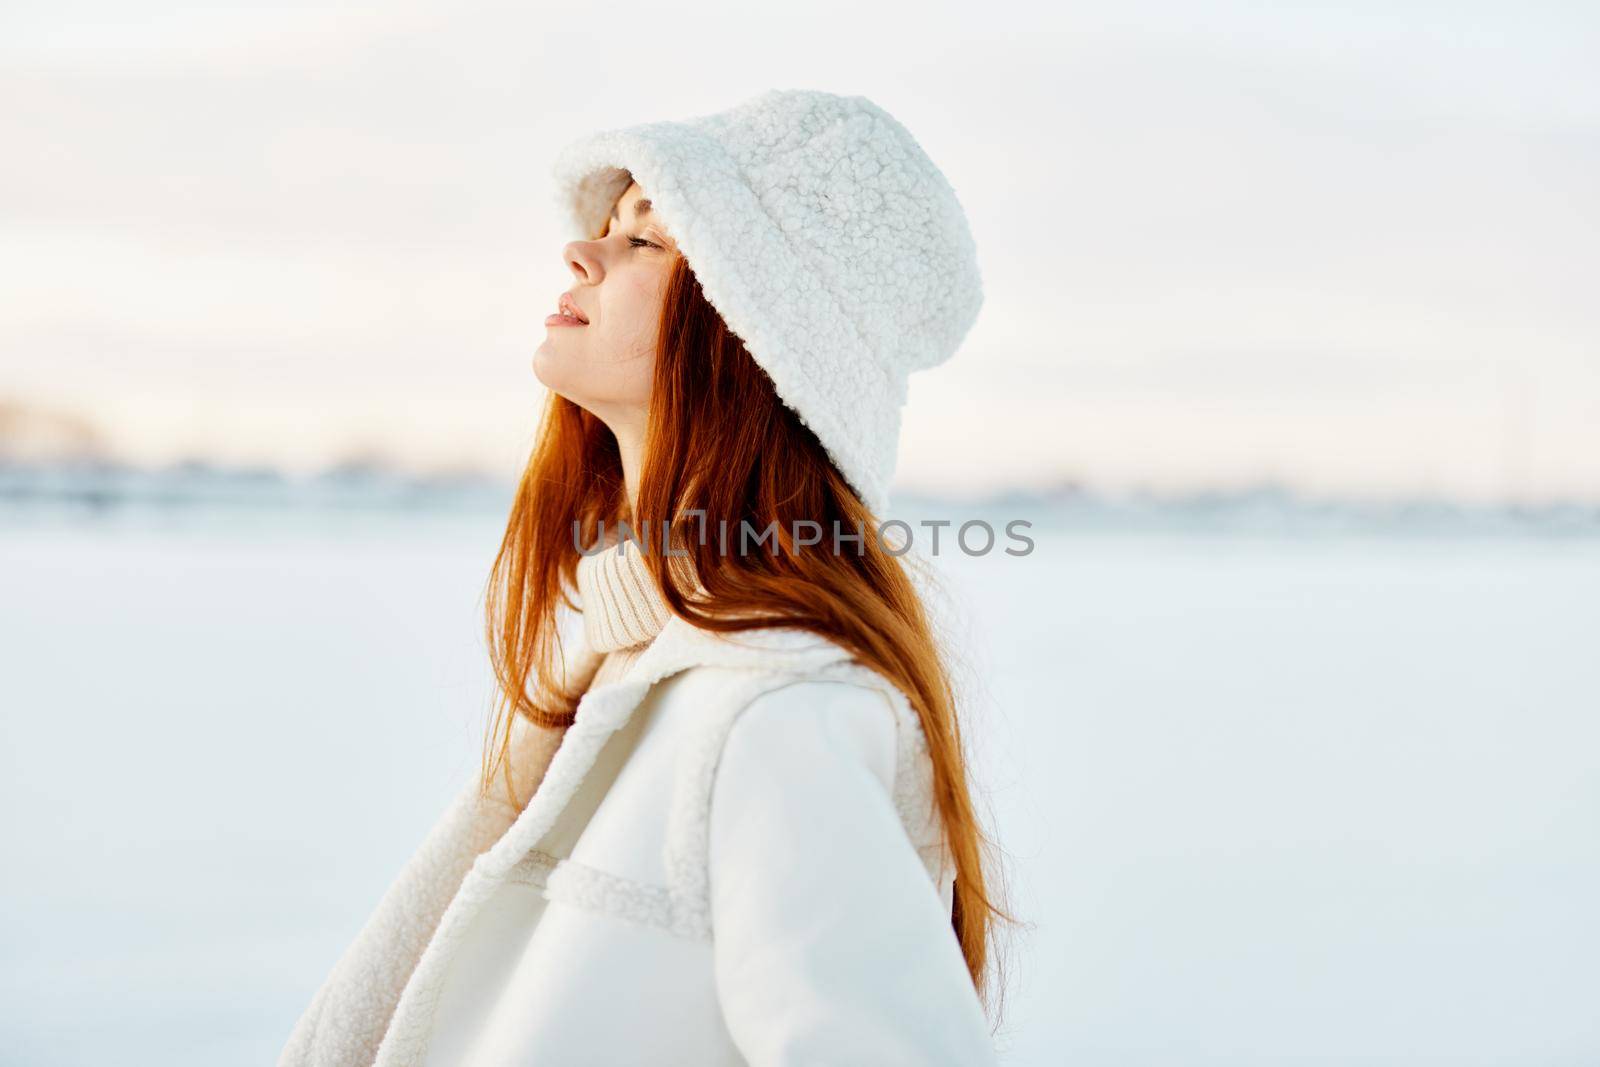 pretty woman smile Winter mood walk white coat Fresh air by SHOTPRIME